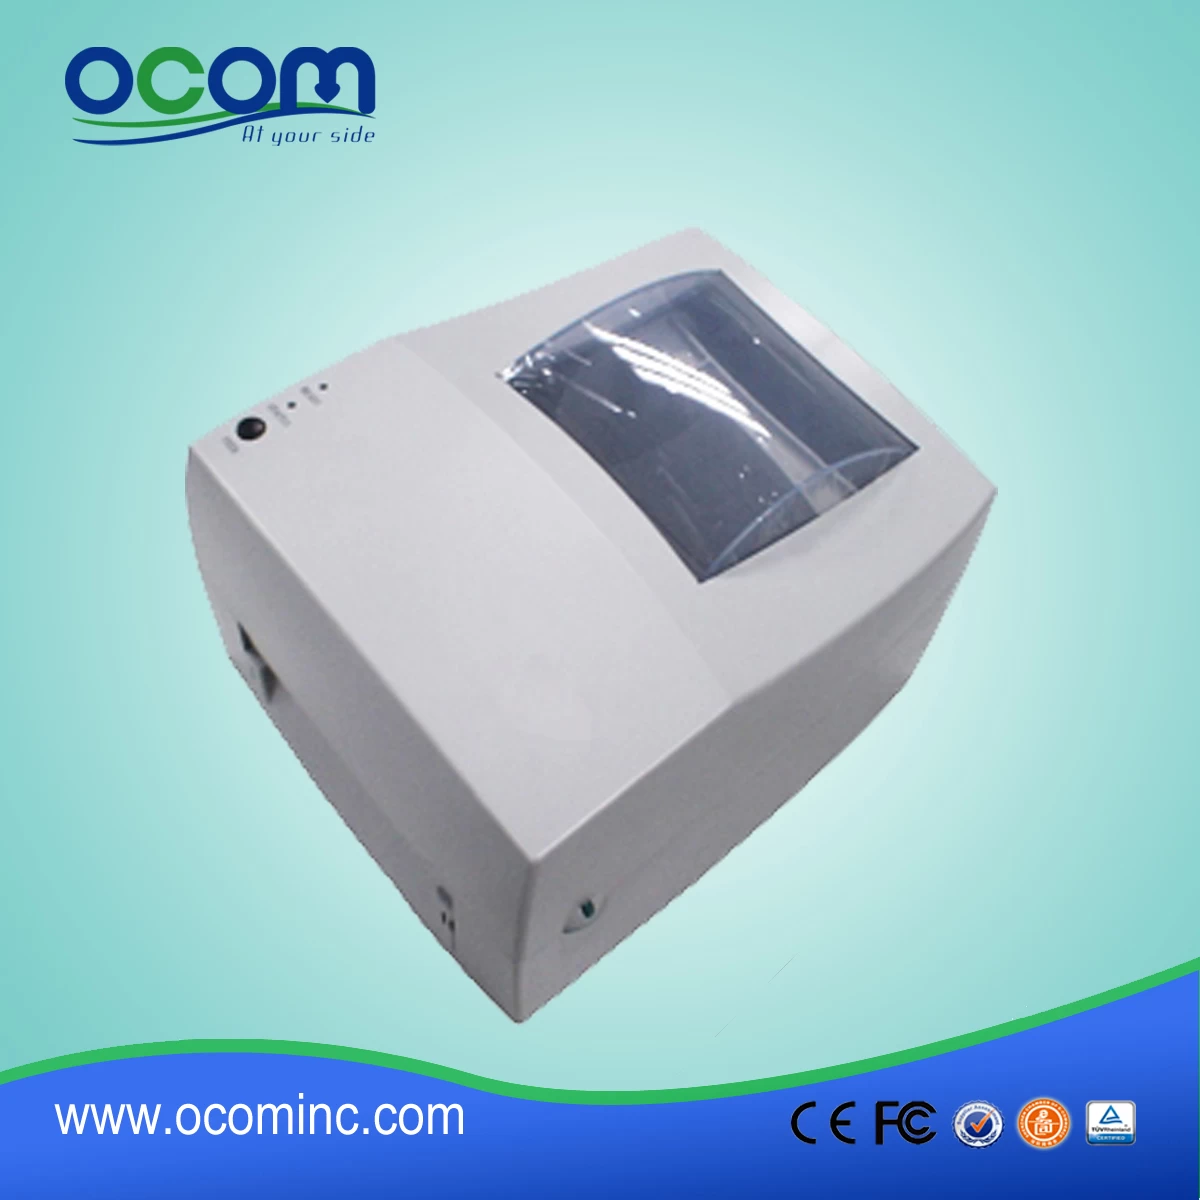 (OCBP-002) Thermal Transfer and Direct Thermal Barcode Label Printer